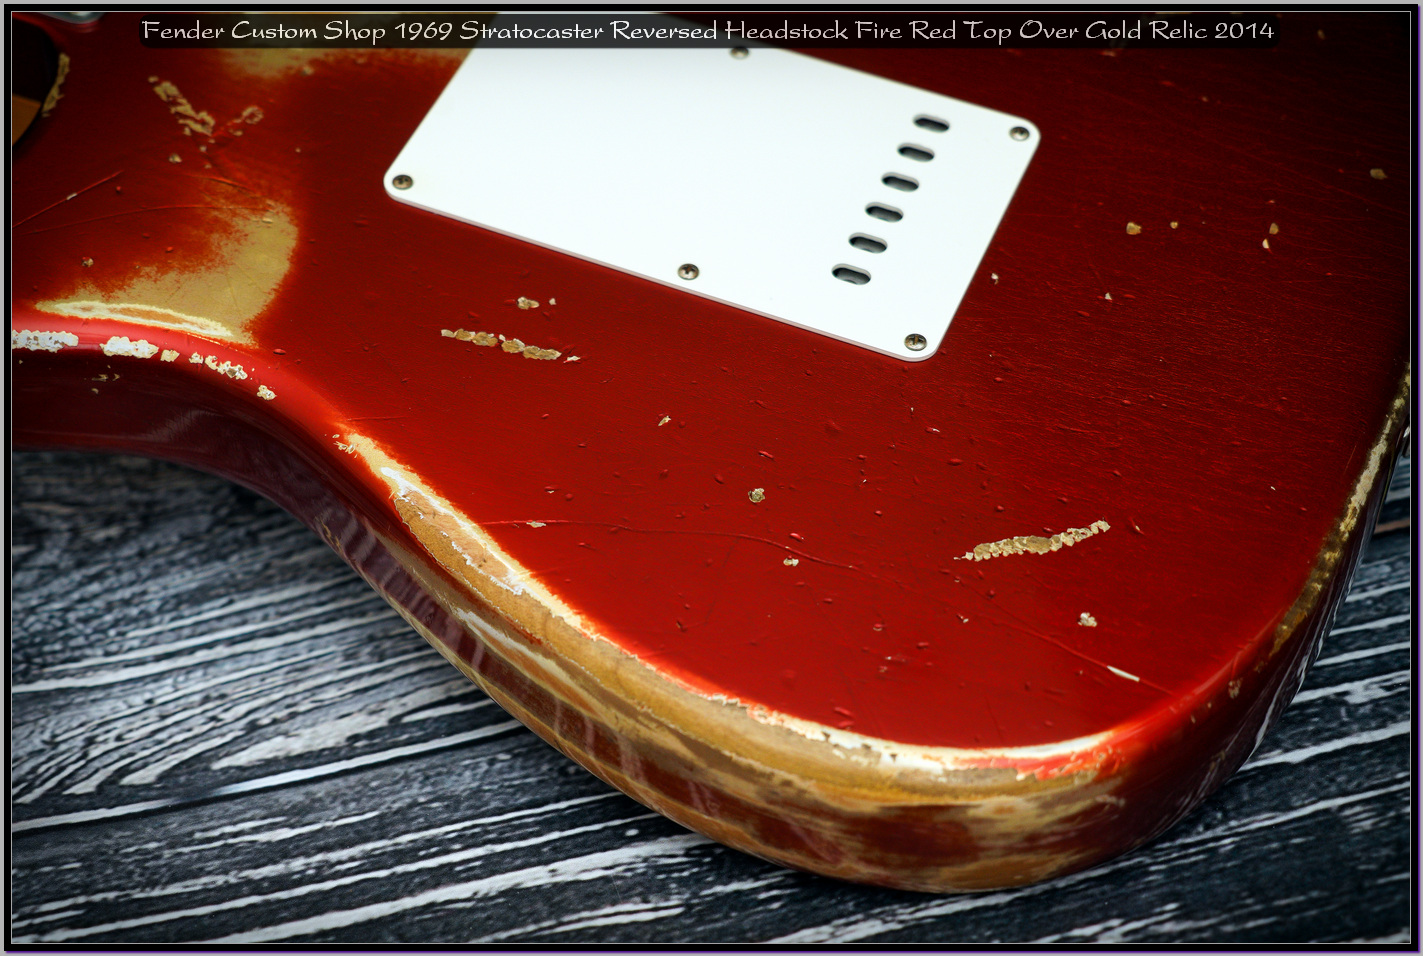 Fender Custom Shop 1969 Stratocaster Reversed Headstock Fire Red Top Over Gold Relic 2014 12_x1440.jpg